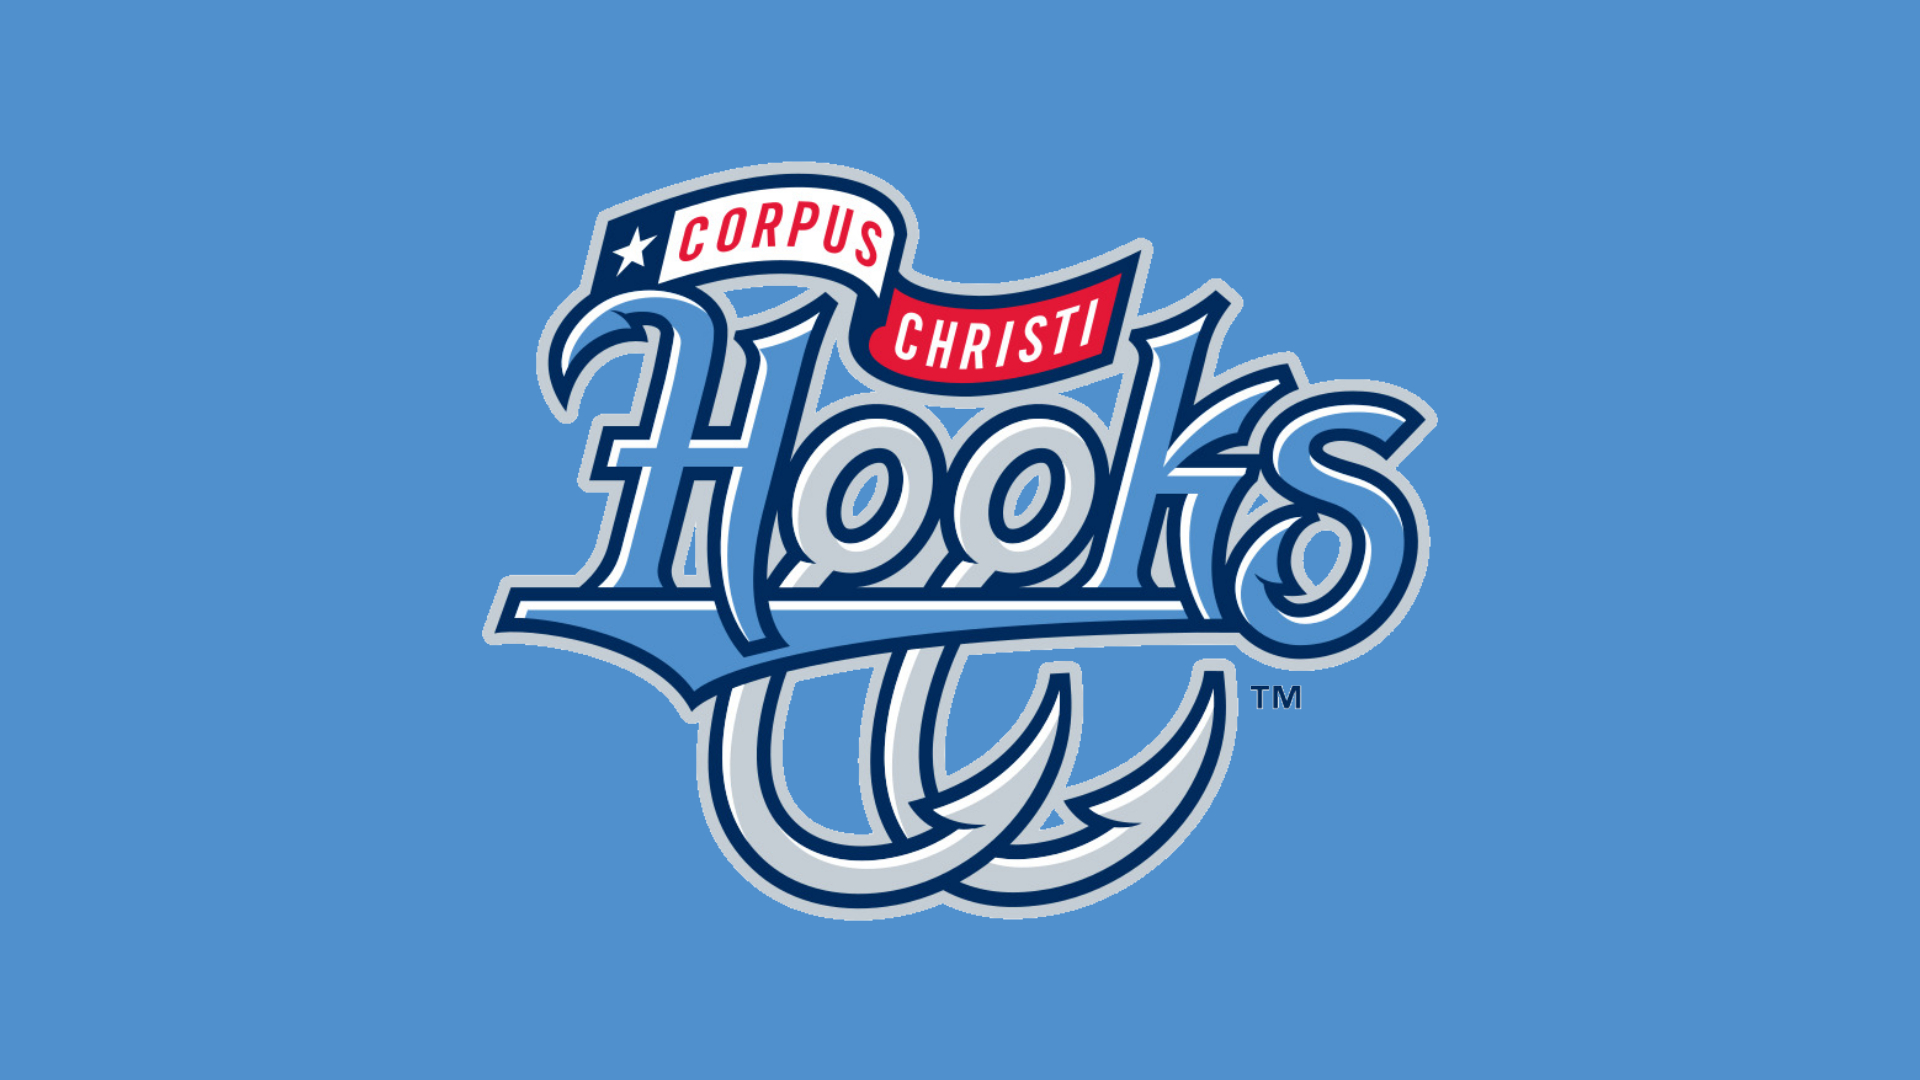 Here's a guide to the Corpus Christi Hooks 2022 season